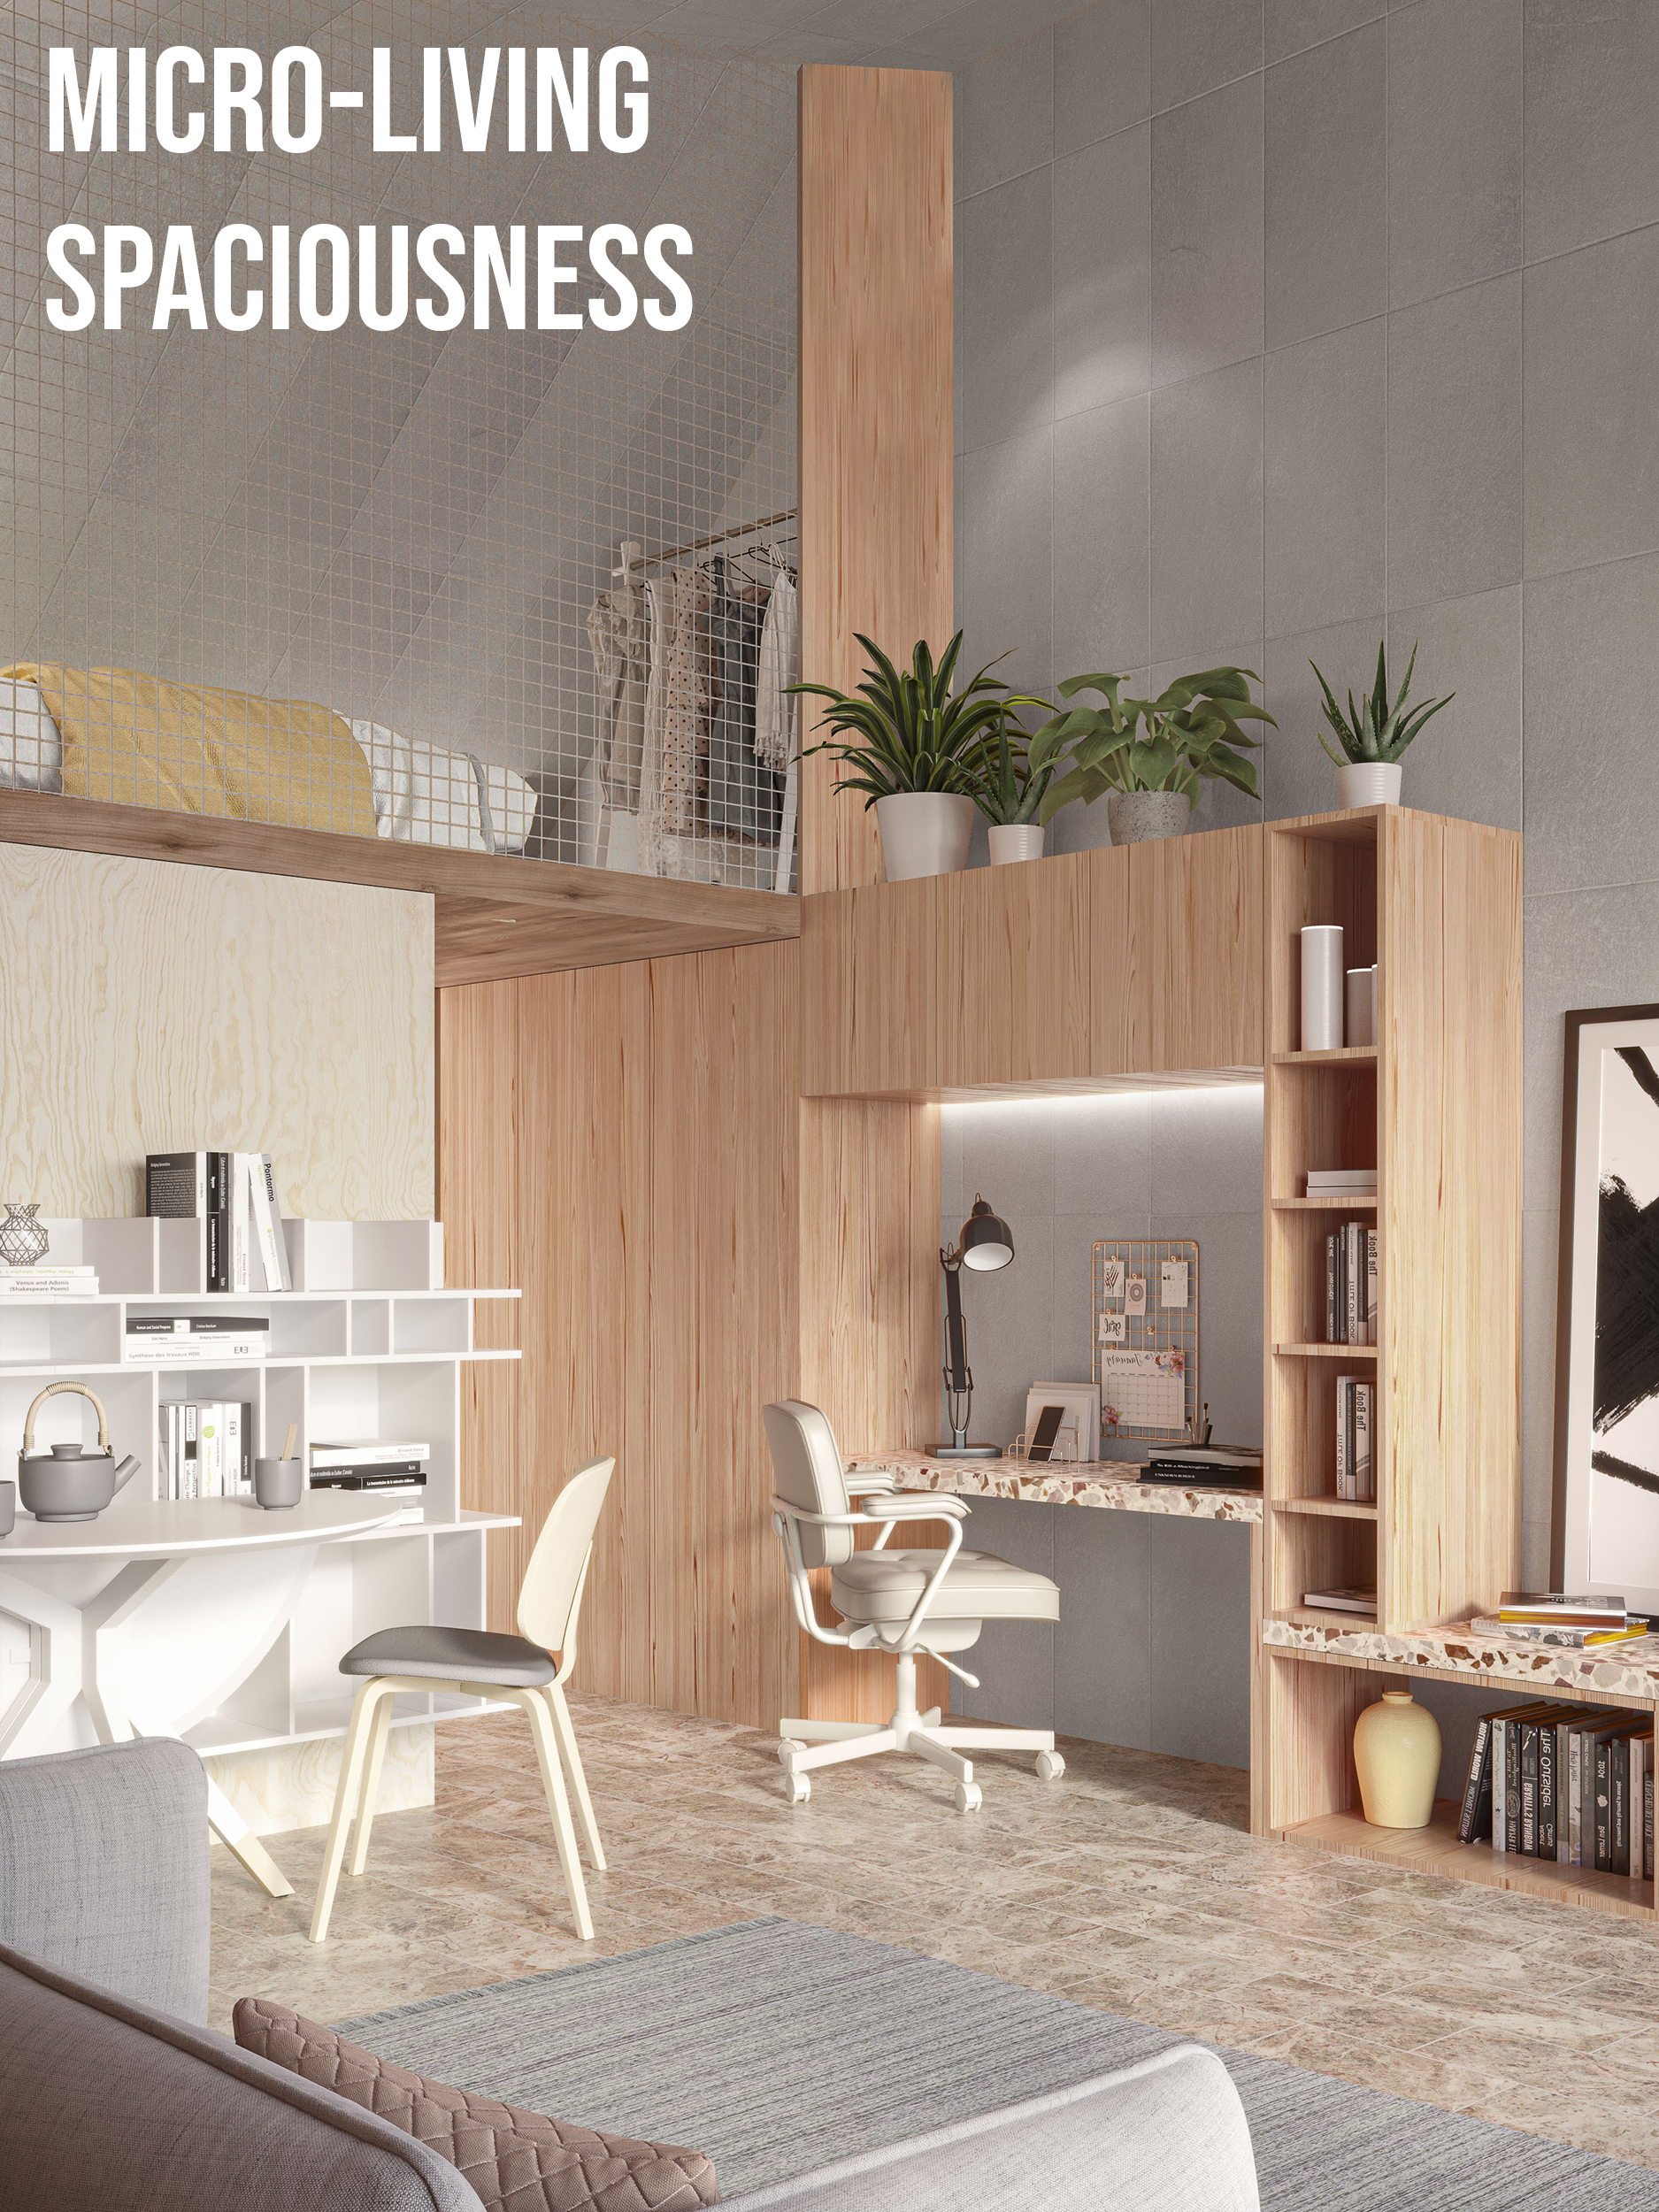 12 Micro-living Spaciousness - Lofts.jpg